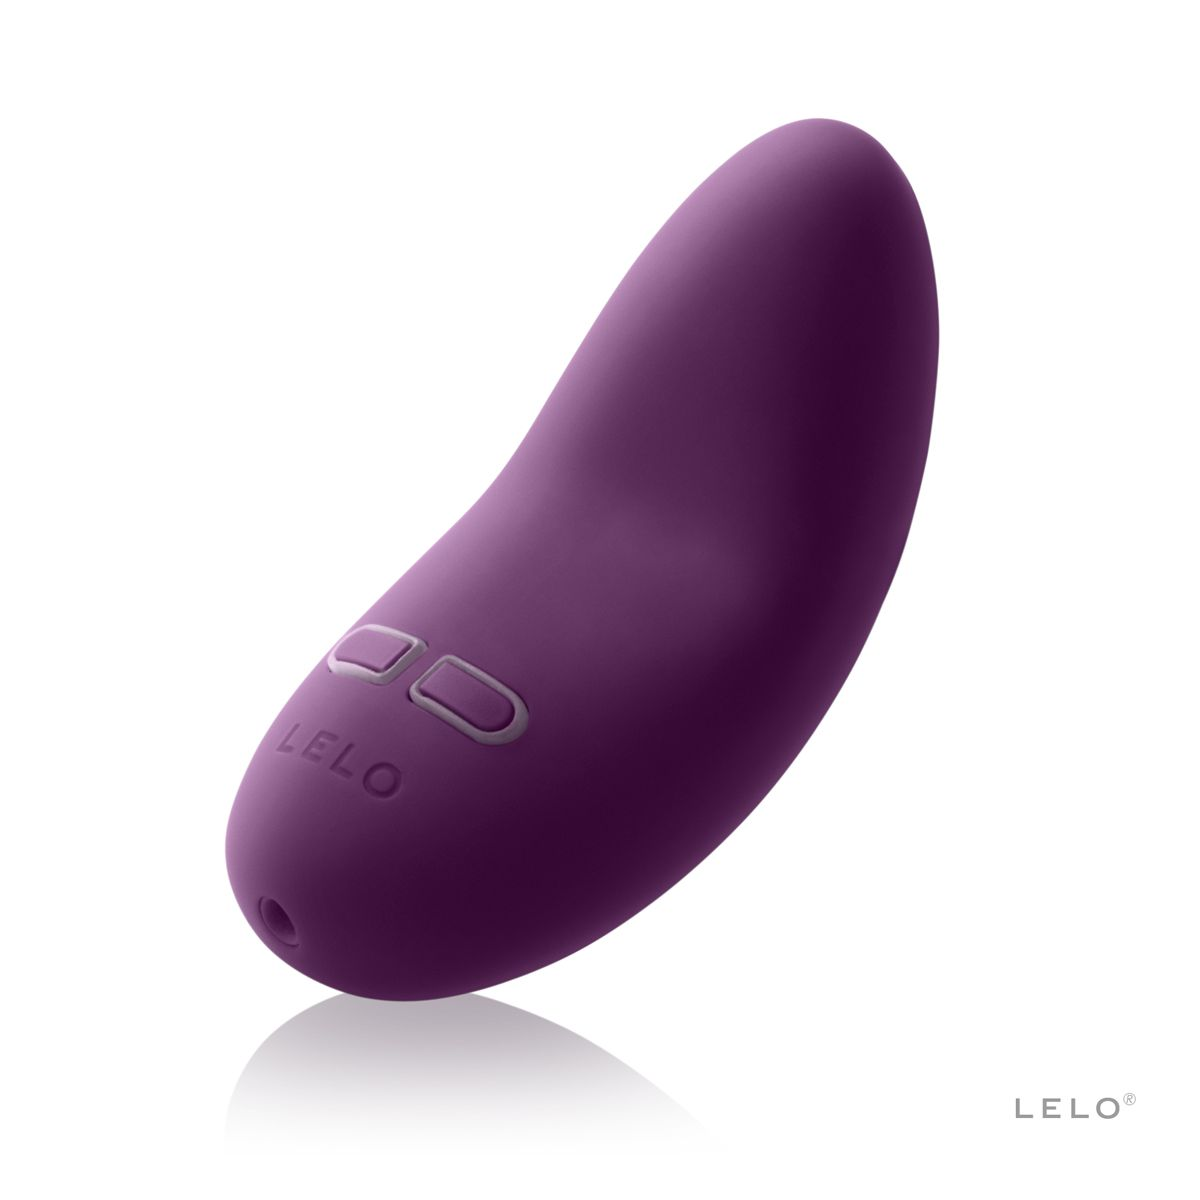 LELO LELO - Lily 2 - Plum auflegevibratoren Oplegvibrator